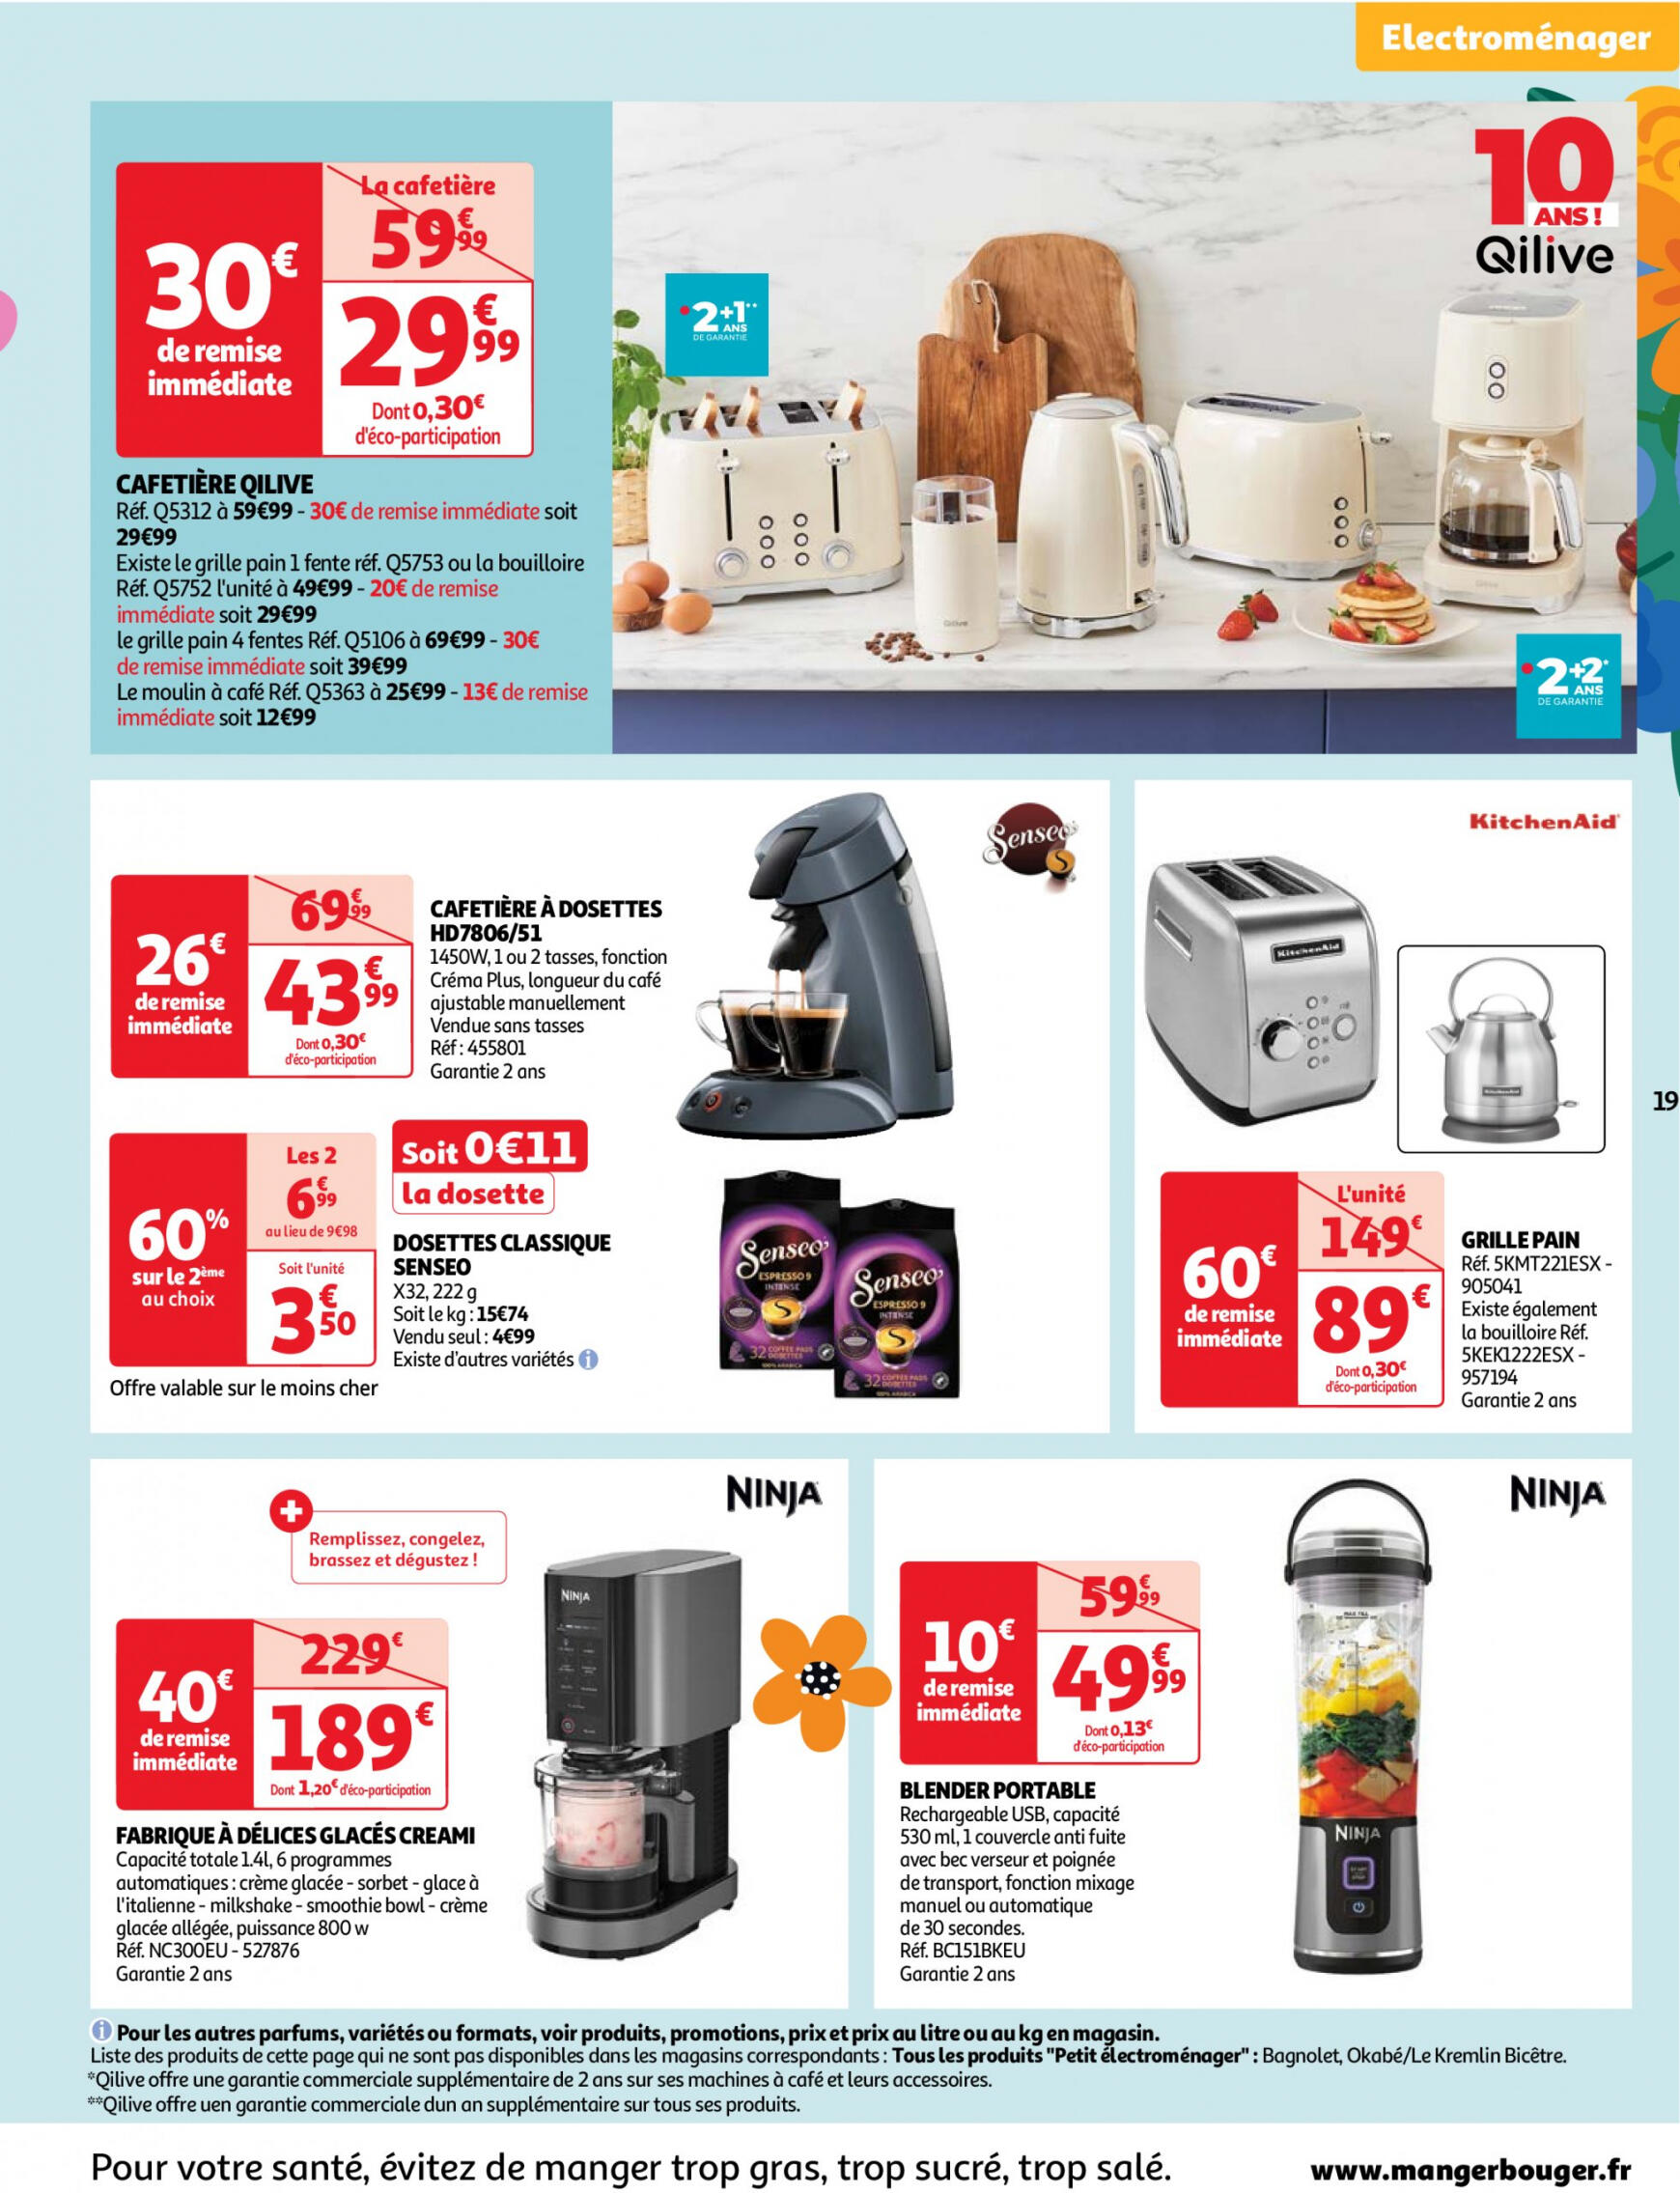 auchan - Auchan - Merci maman folder huidig 14.05. - 26.05. - page: 19